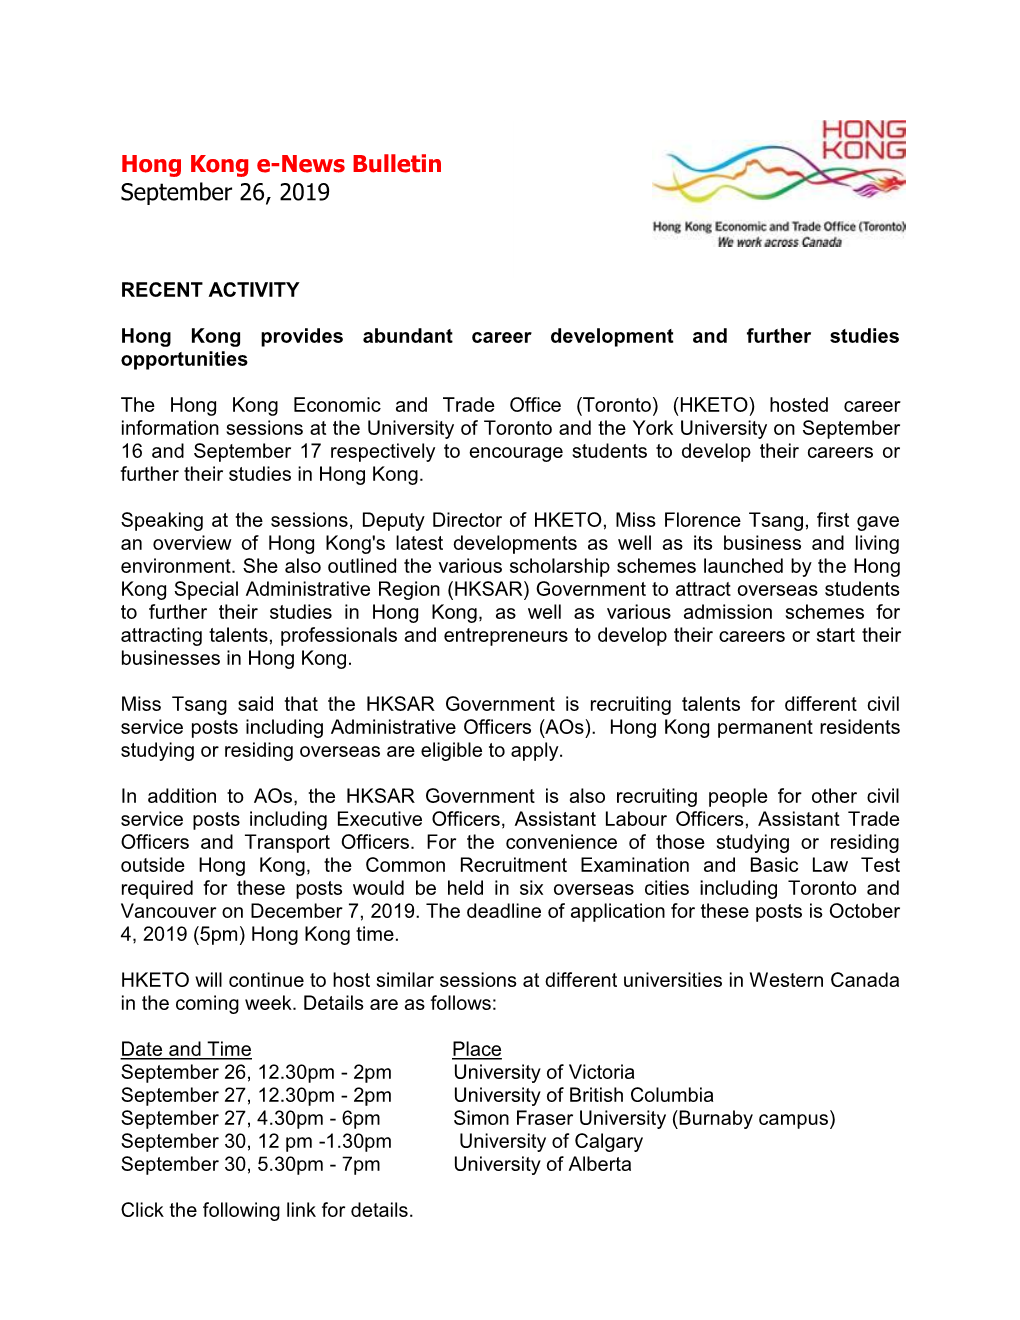 Hong Kong E-News Bulletin September 26, 2019